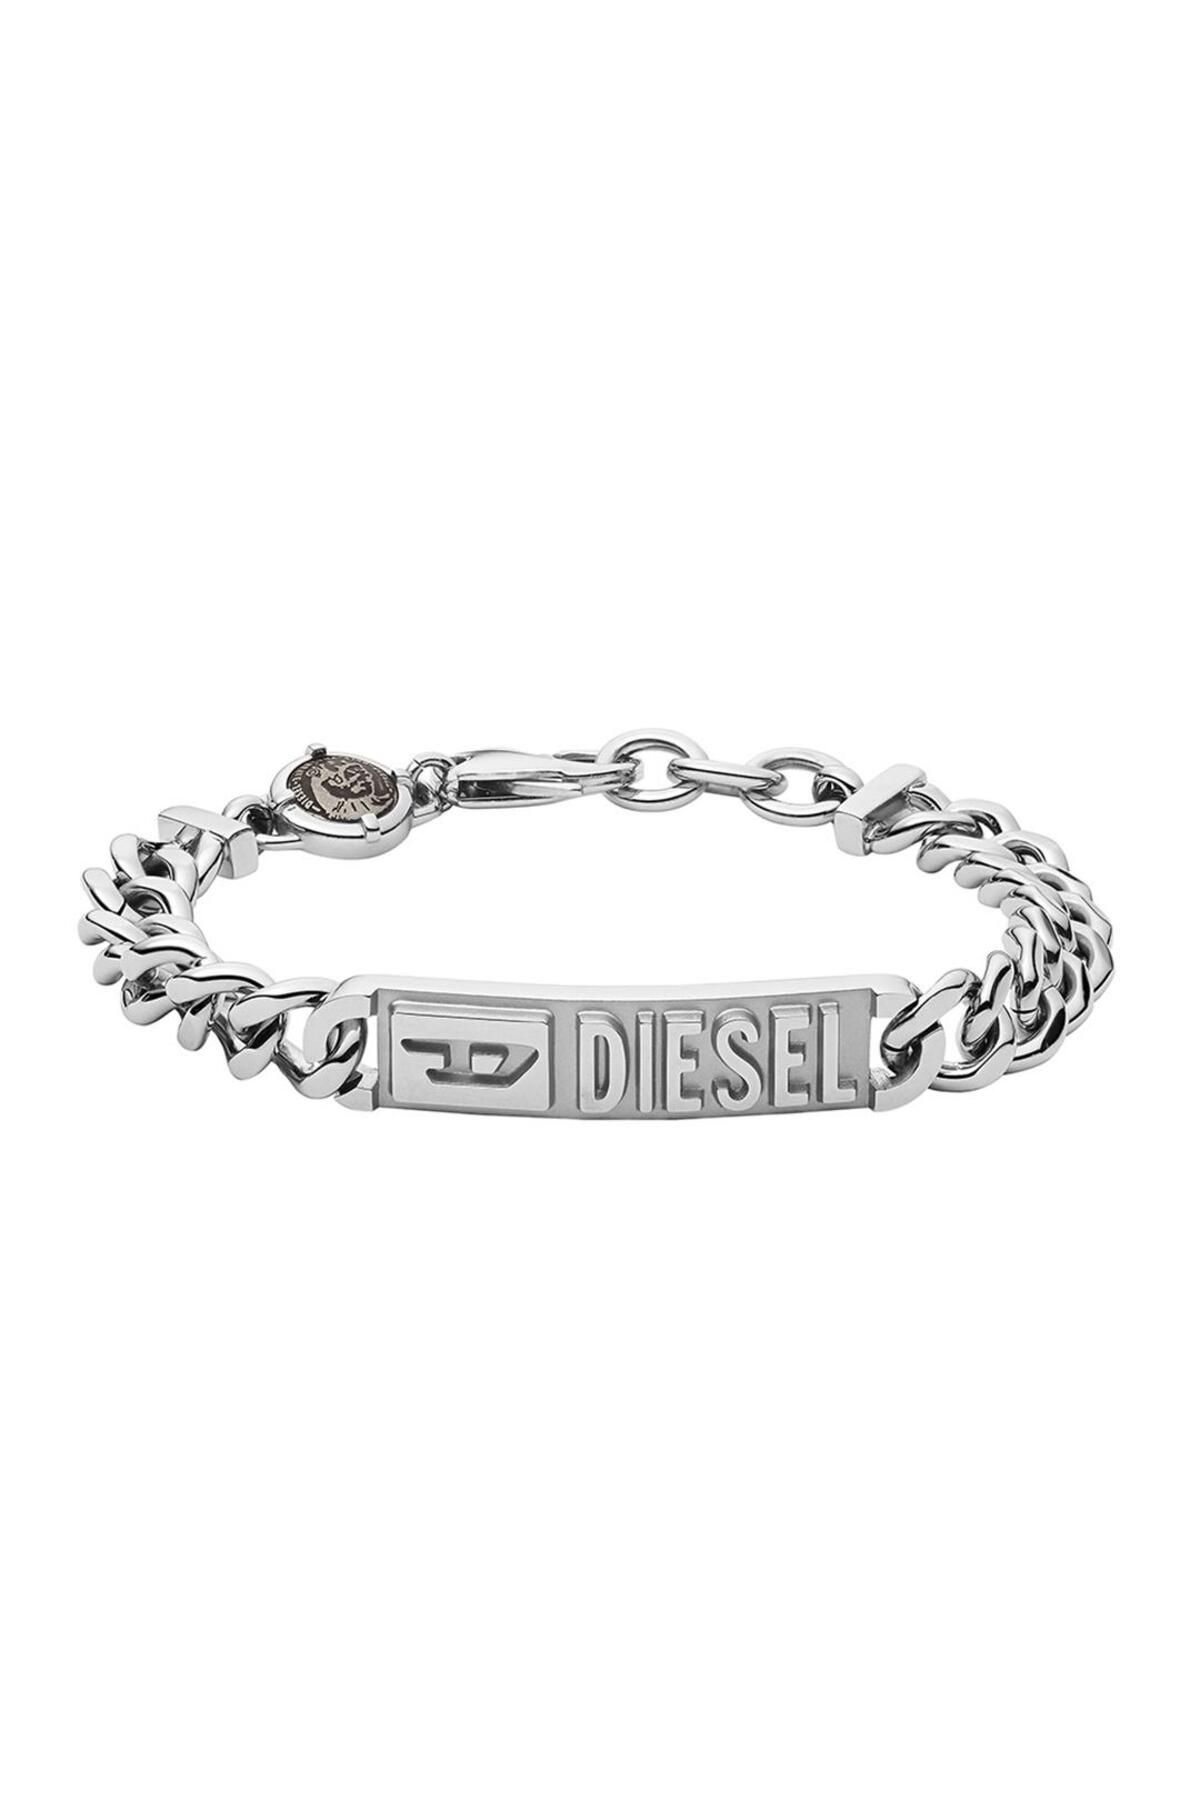 Diesel Djdx1225-040 Erkek Bileklik